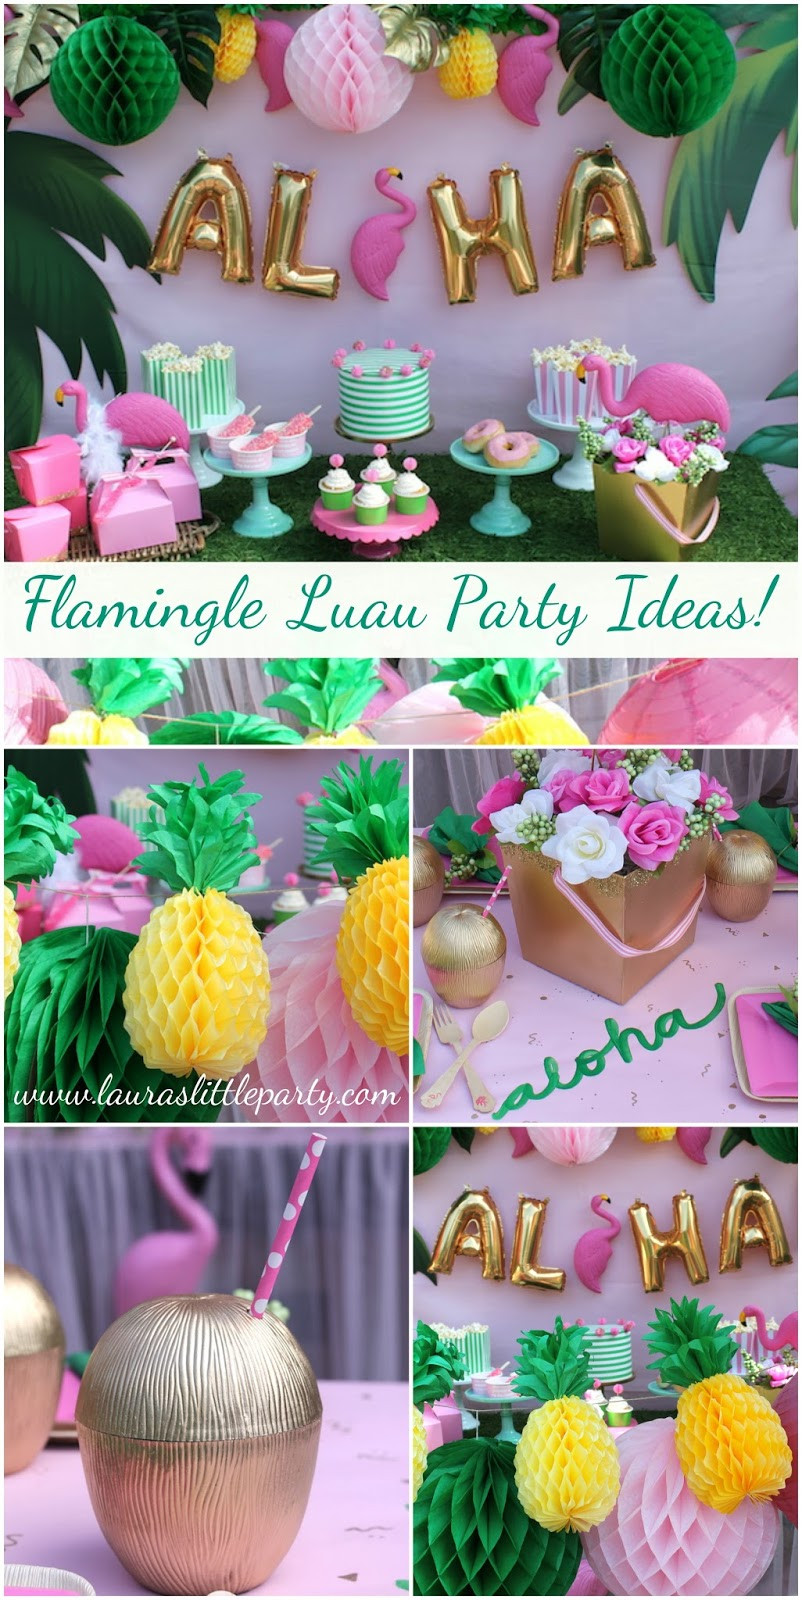 Summer Theme Party Ideas
 Let s Flamingle Luau Summer Party Ideas LAURA S little